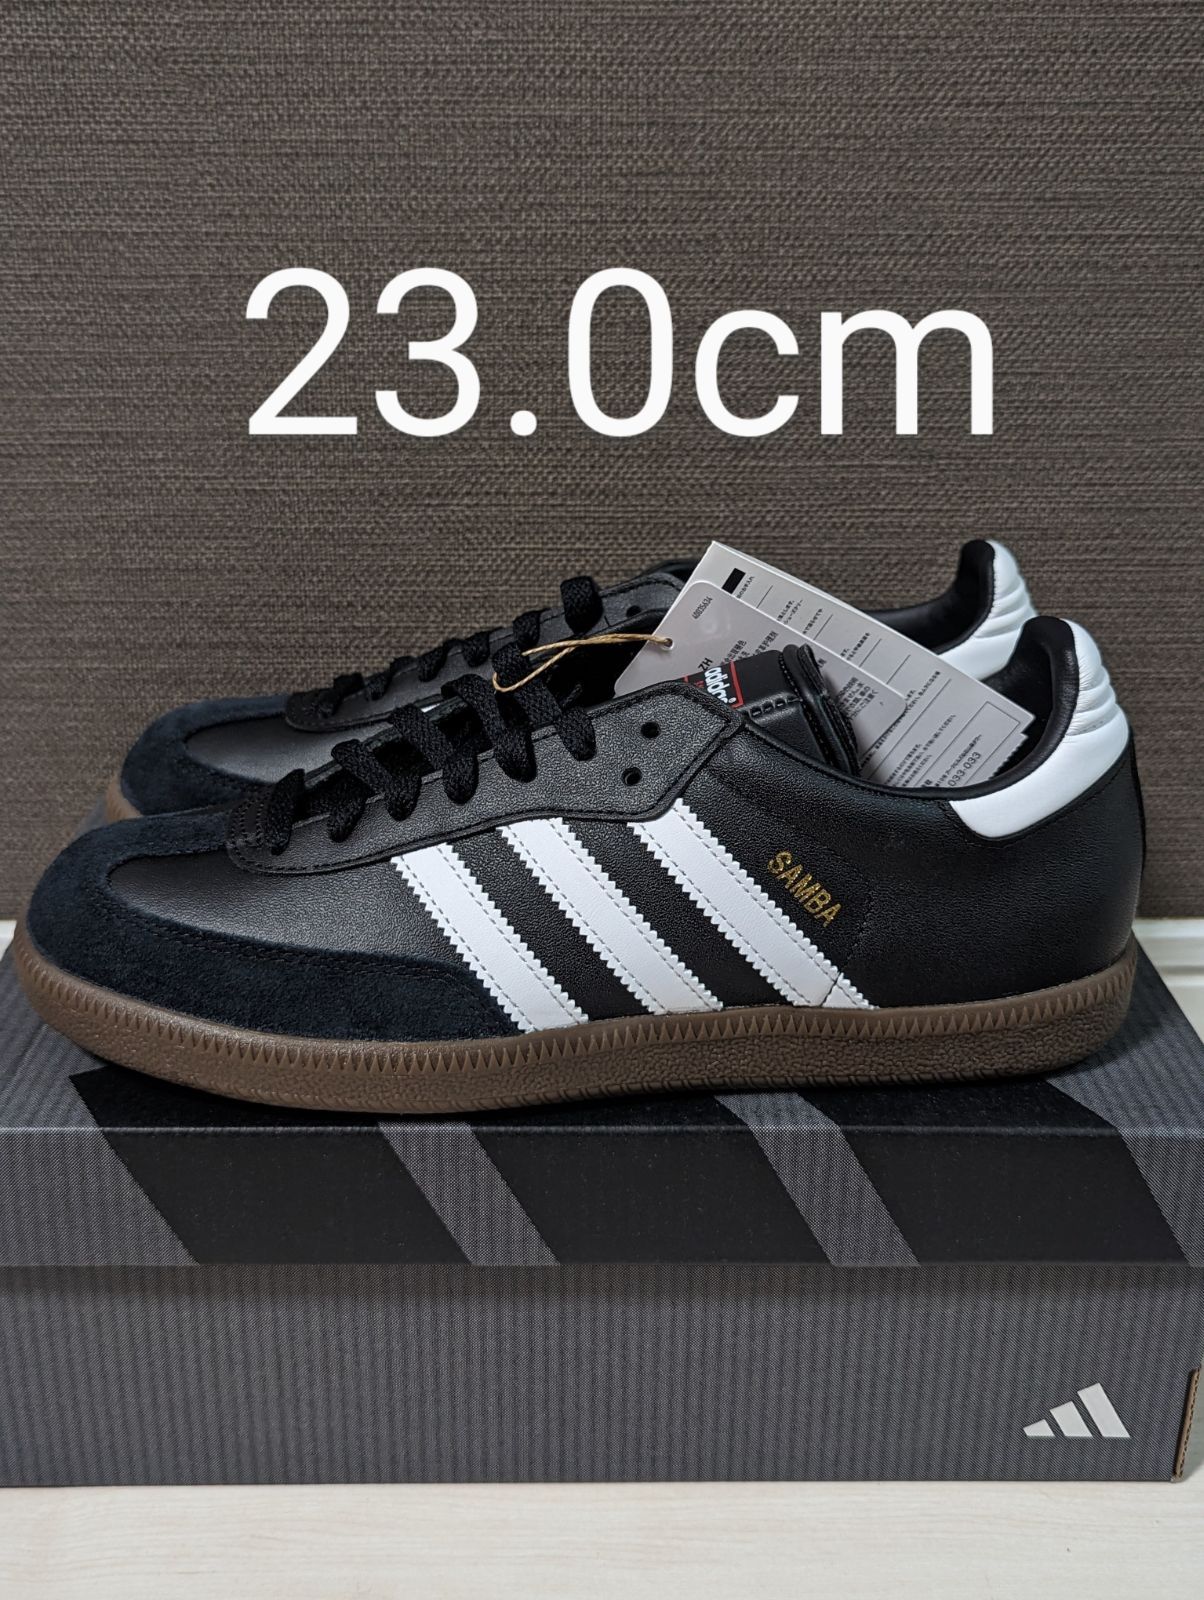 23.0cm 送料無料 新品未使用 adidas Samba Leather Core Black